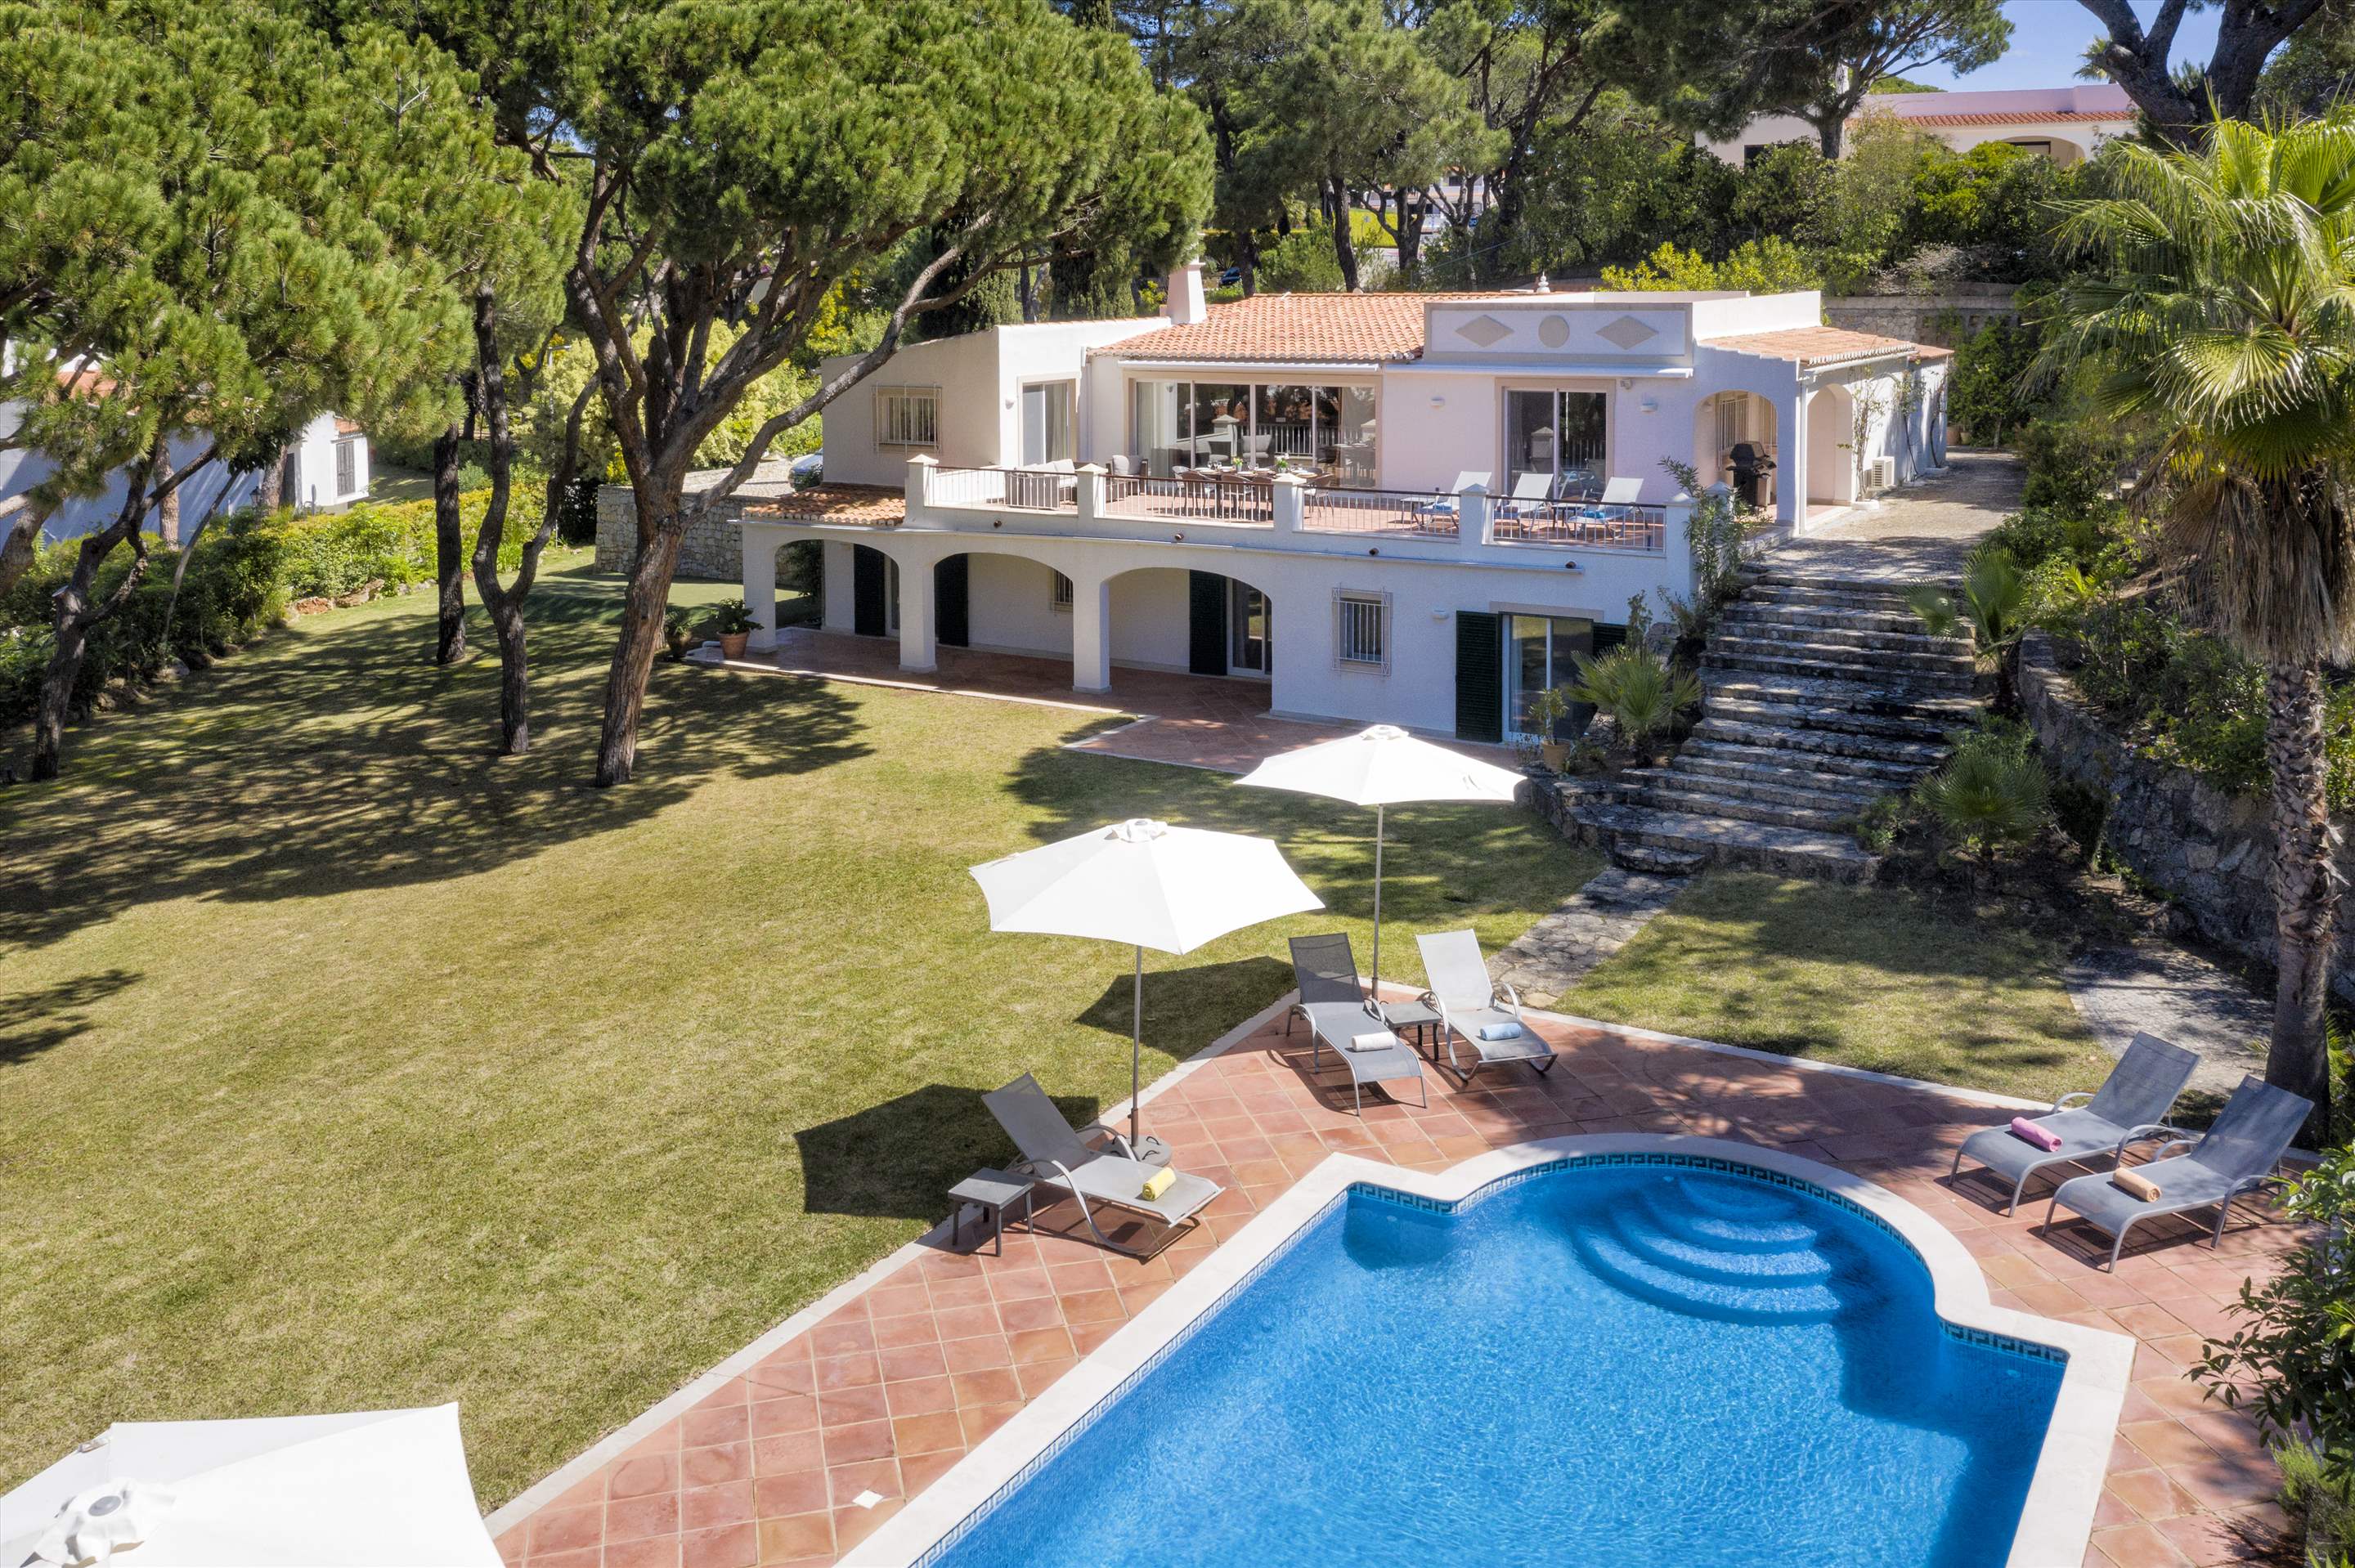 Villa Rosemaria, 5 Bedrooms, 5 bedroom villa in Vale do Lobo, Algarve